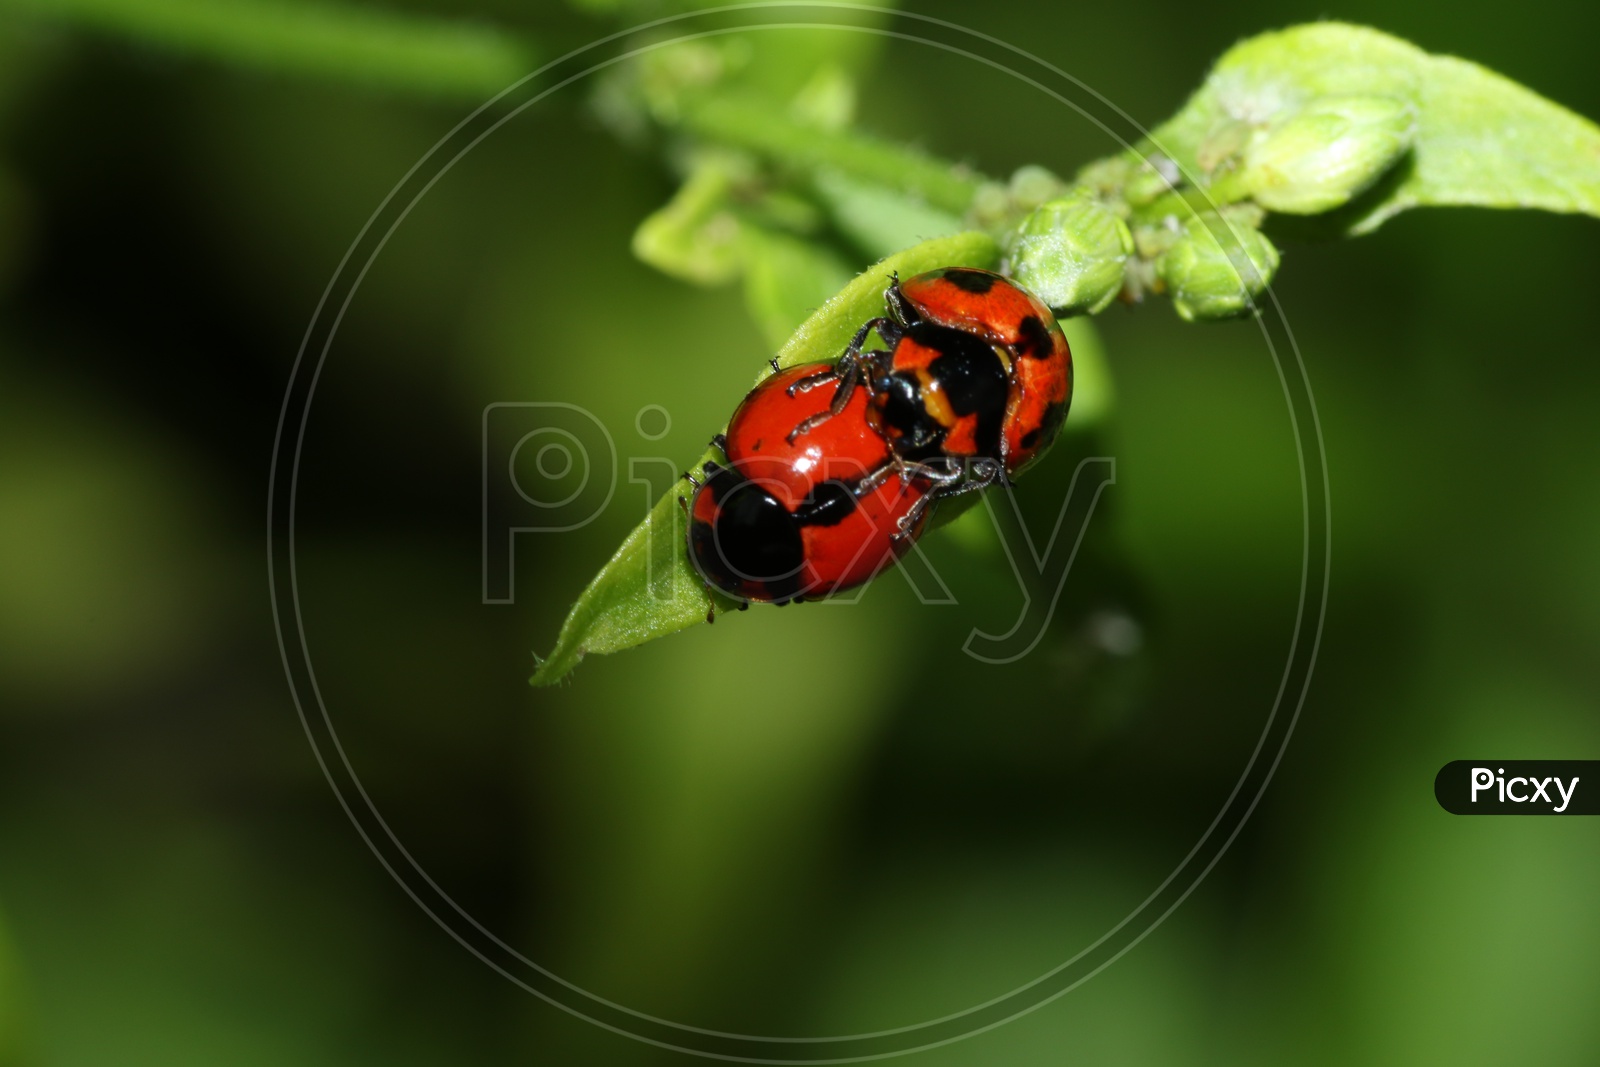 Ladybug on the green leaf, macro shot